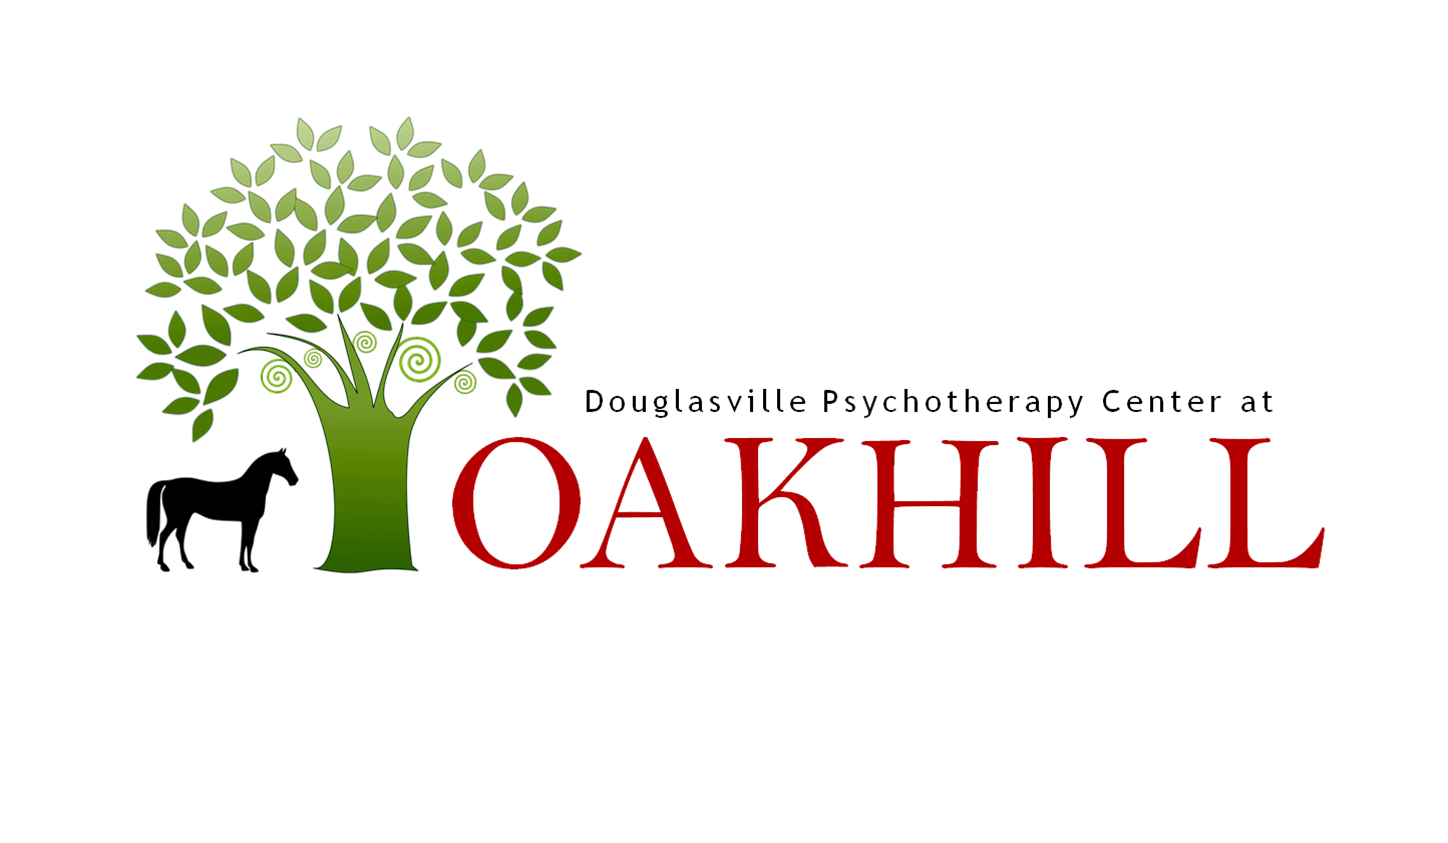 Douglasville Psychotherapy at Oakhill